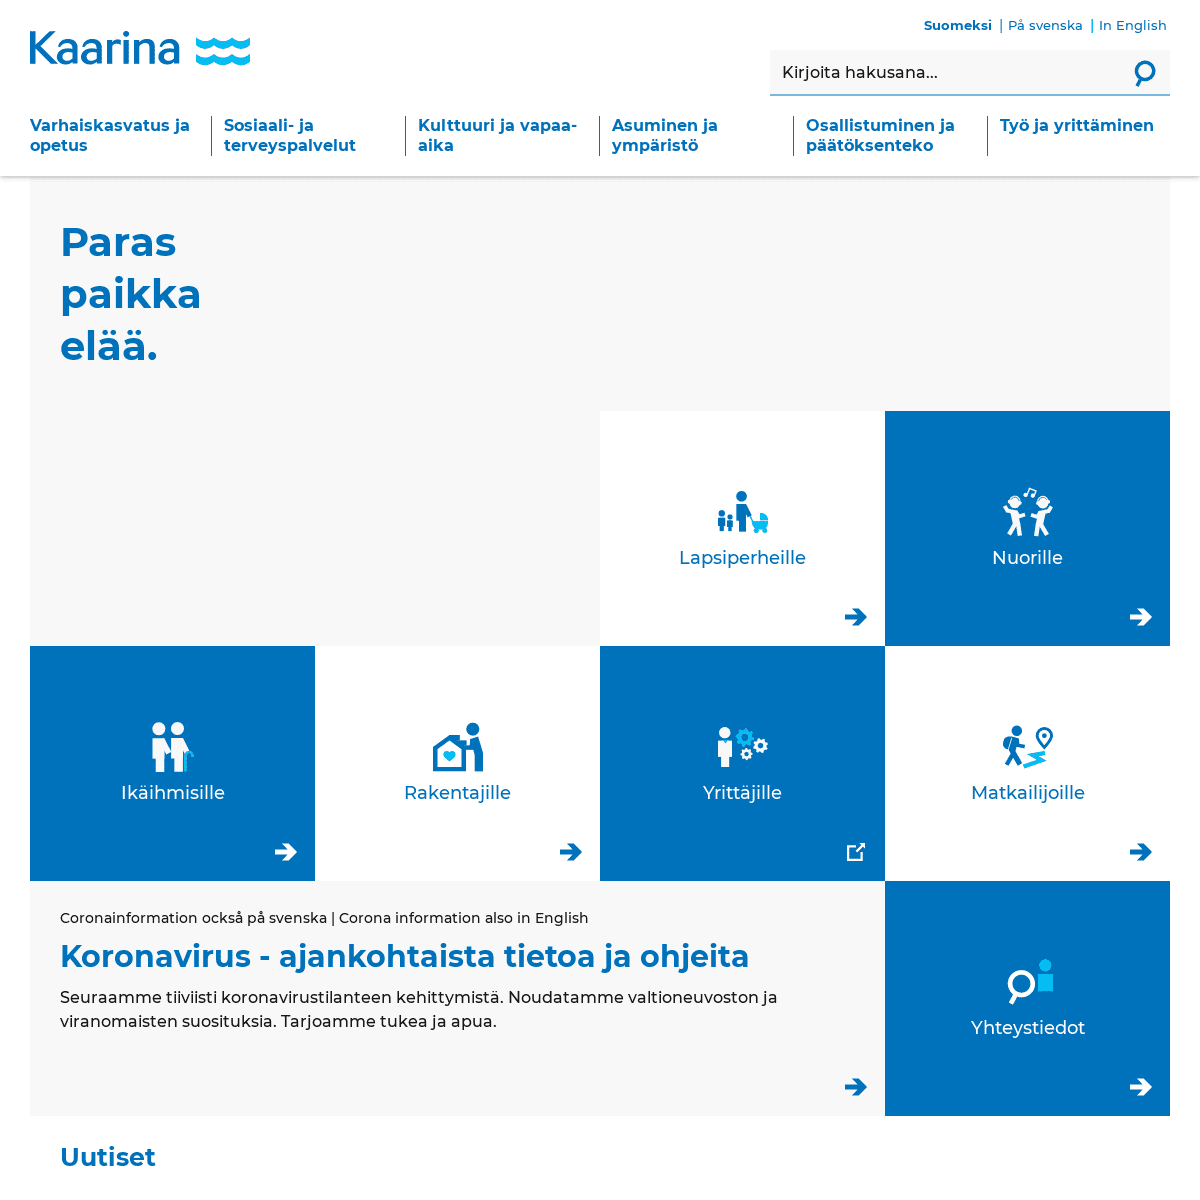 A complete backup of https://kaarina.fi